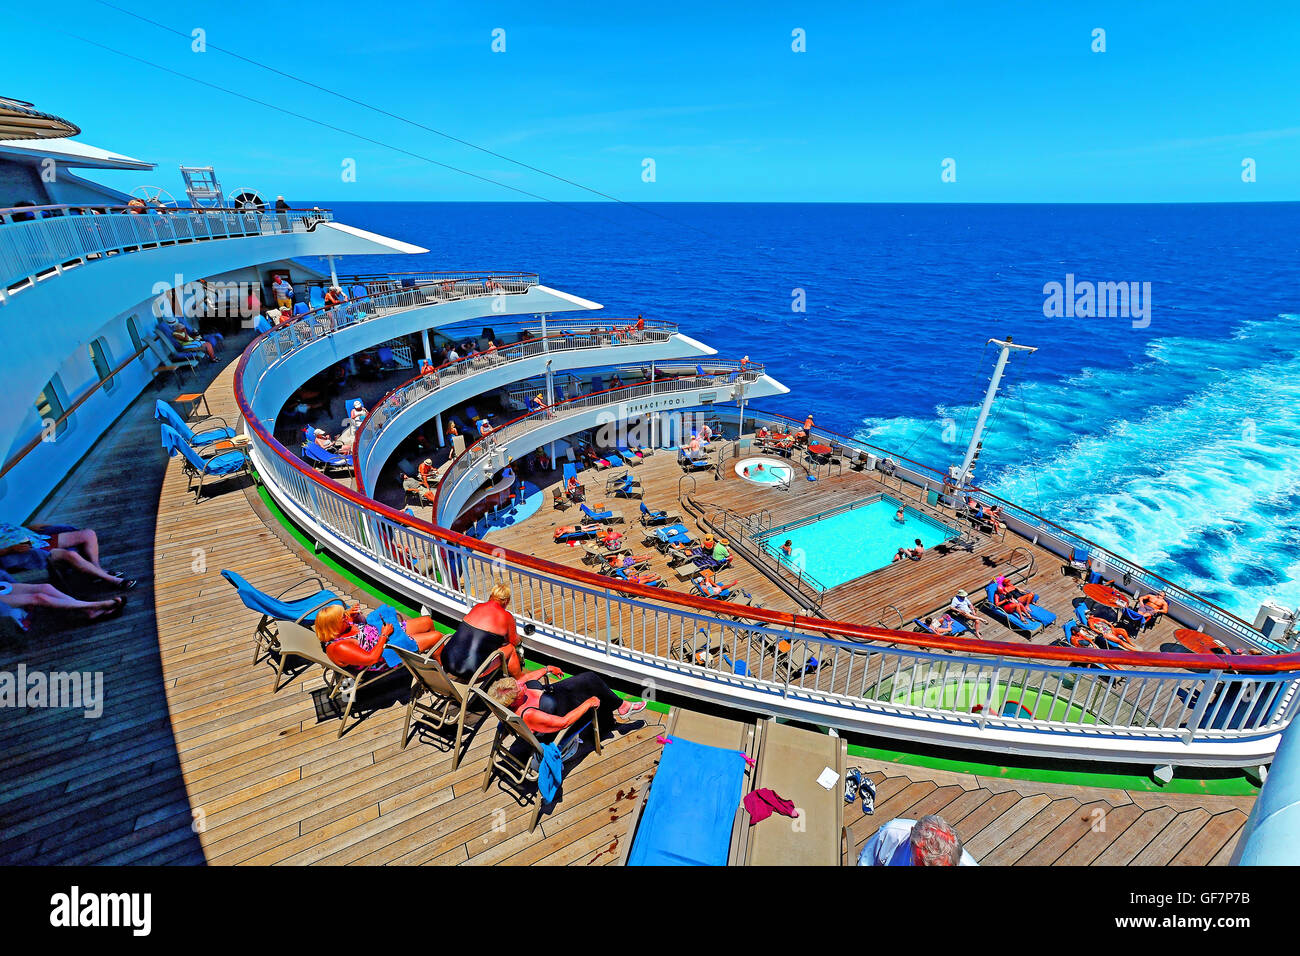 P&O cruise ship Aurora aft terrace pool in the Mediterranean sea Stock